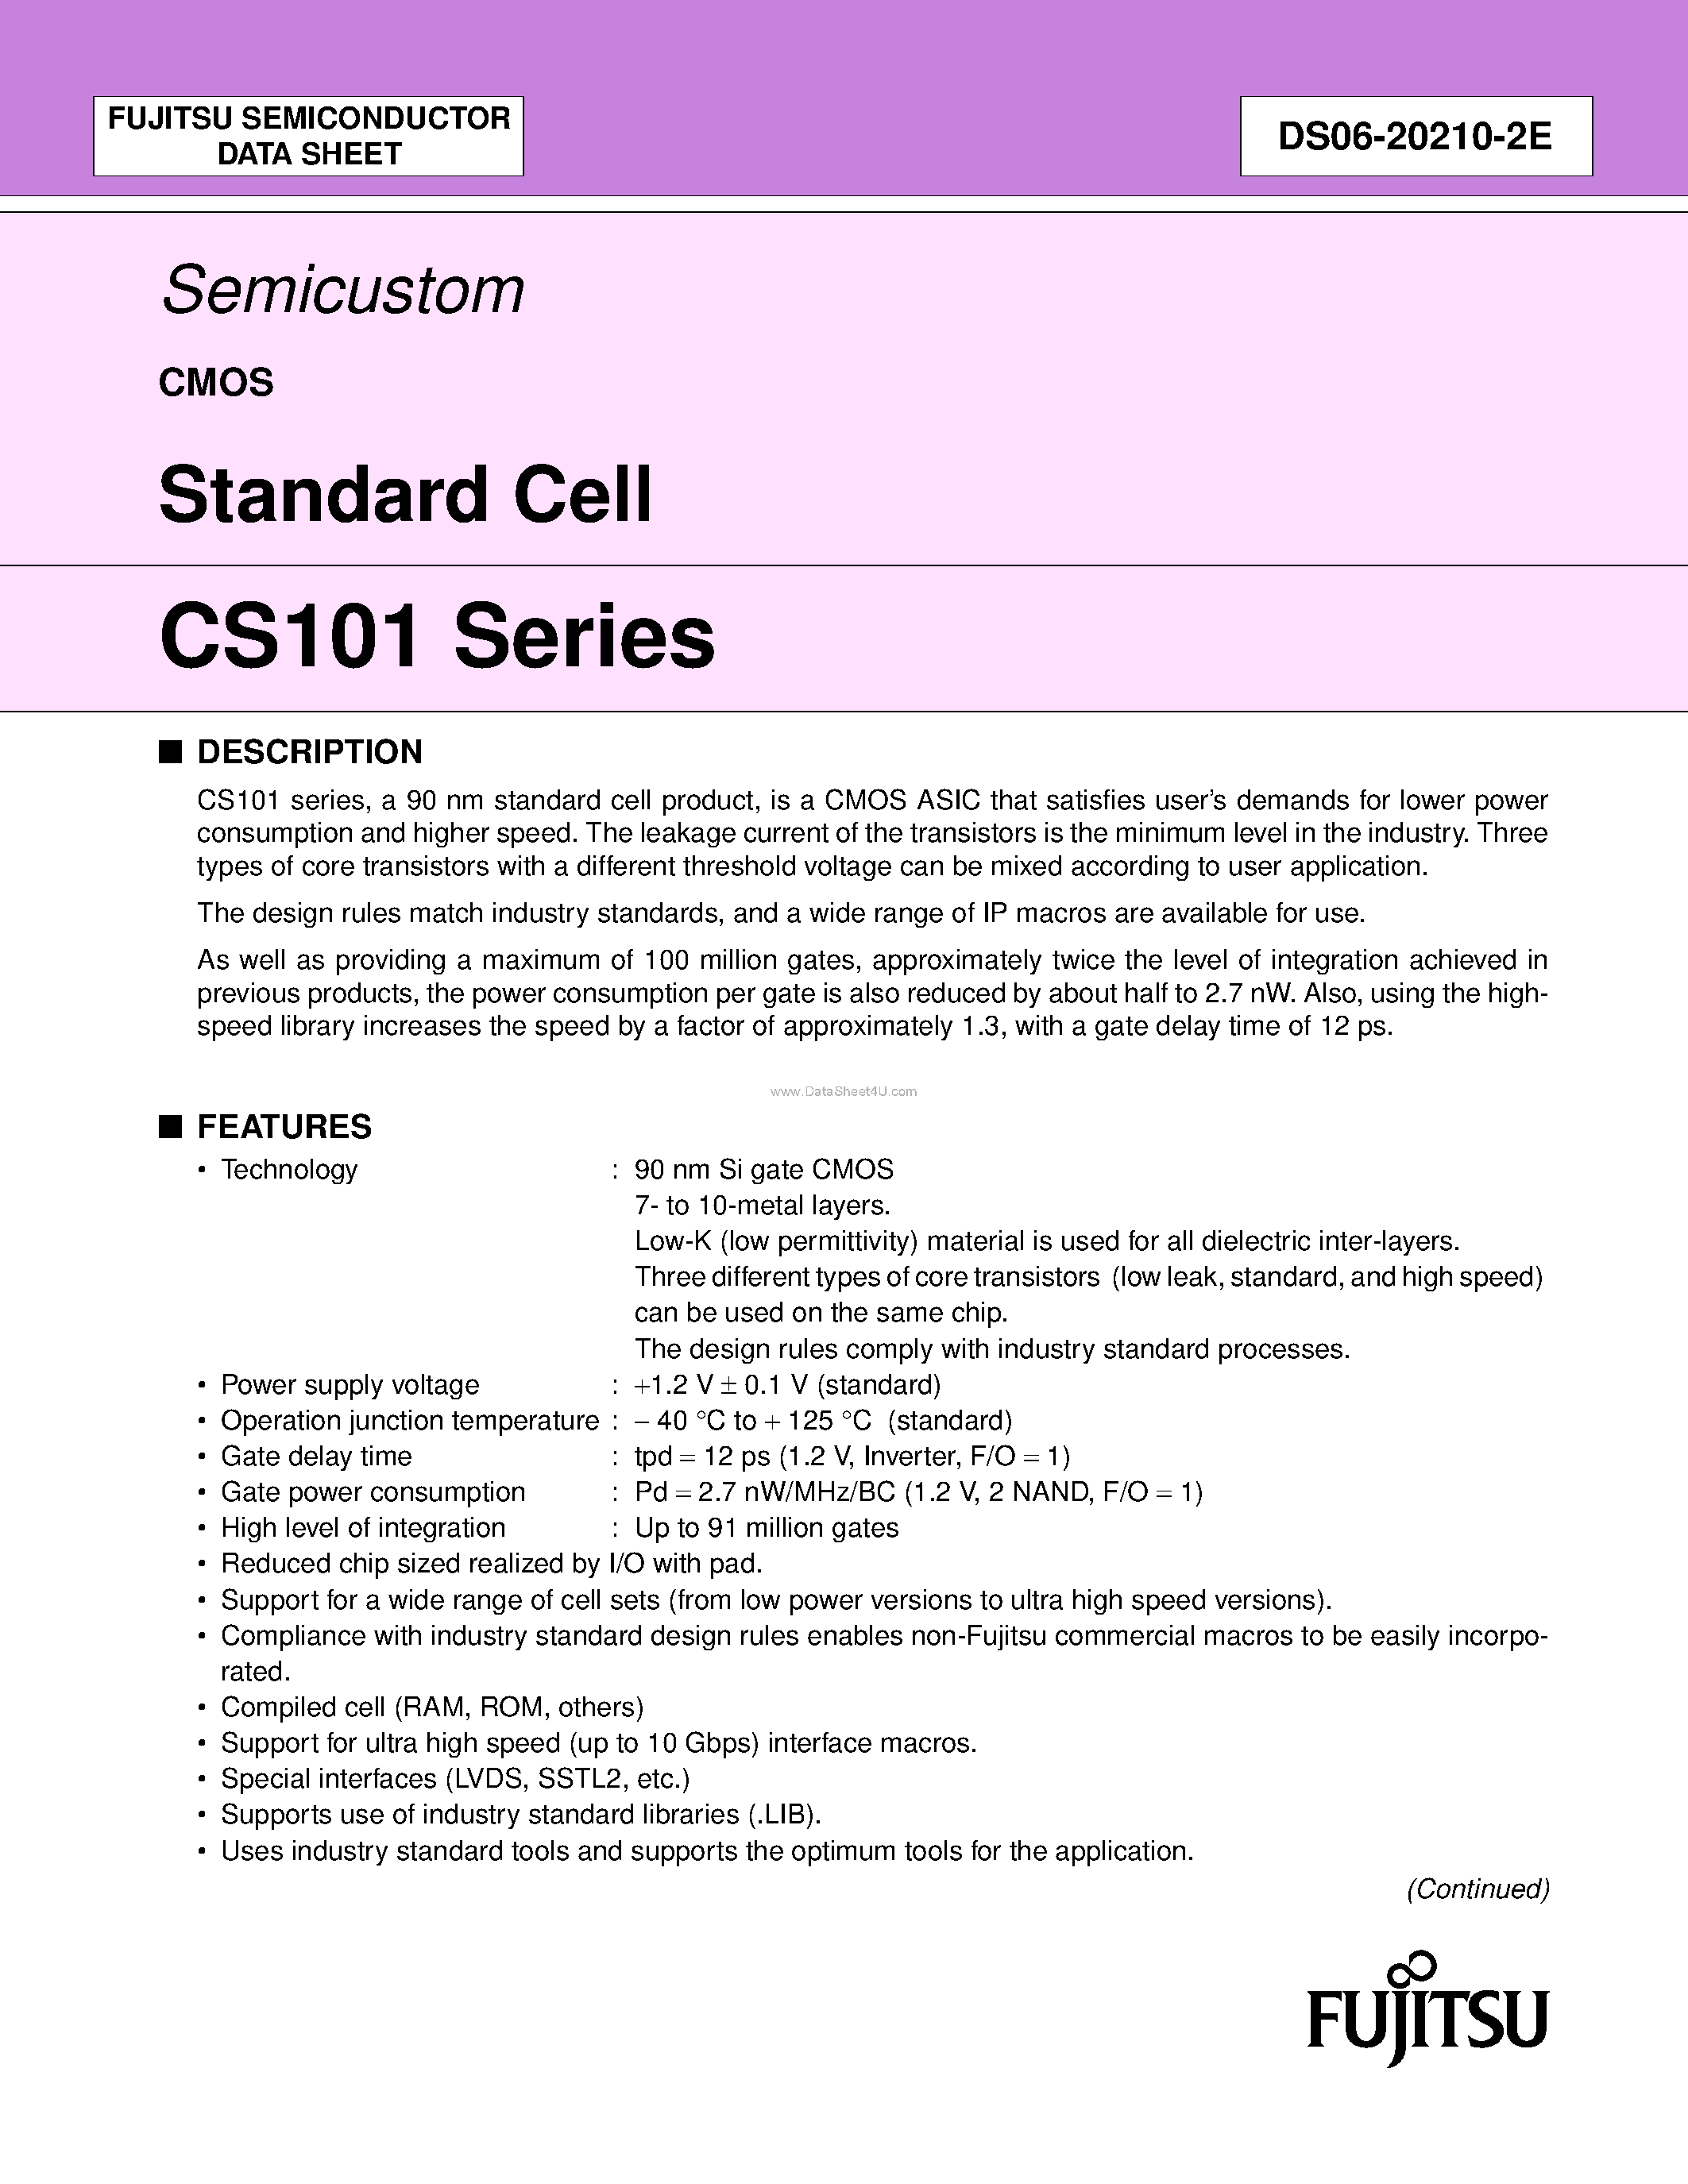 Даташит CS101 - Standard Cell страница 1